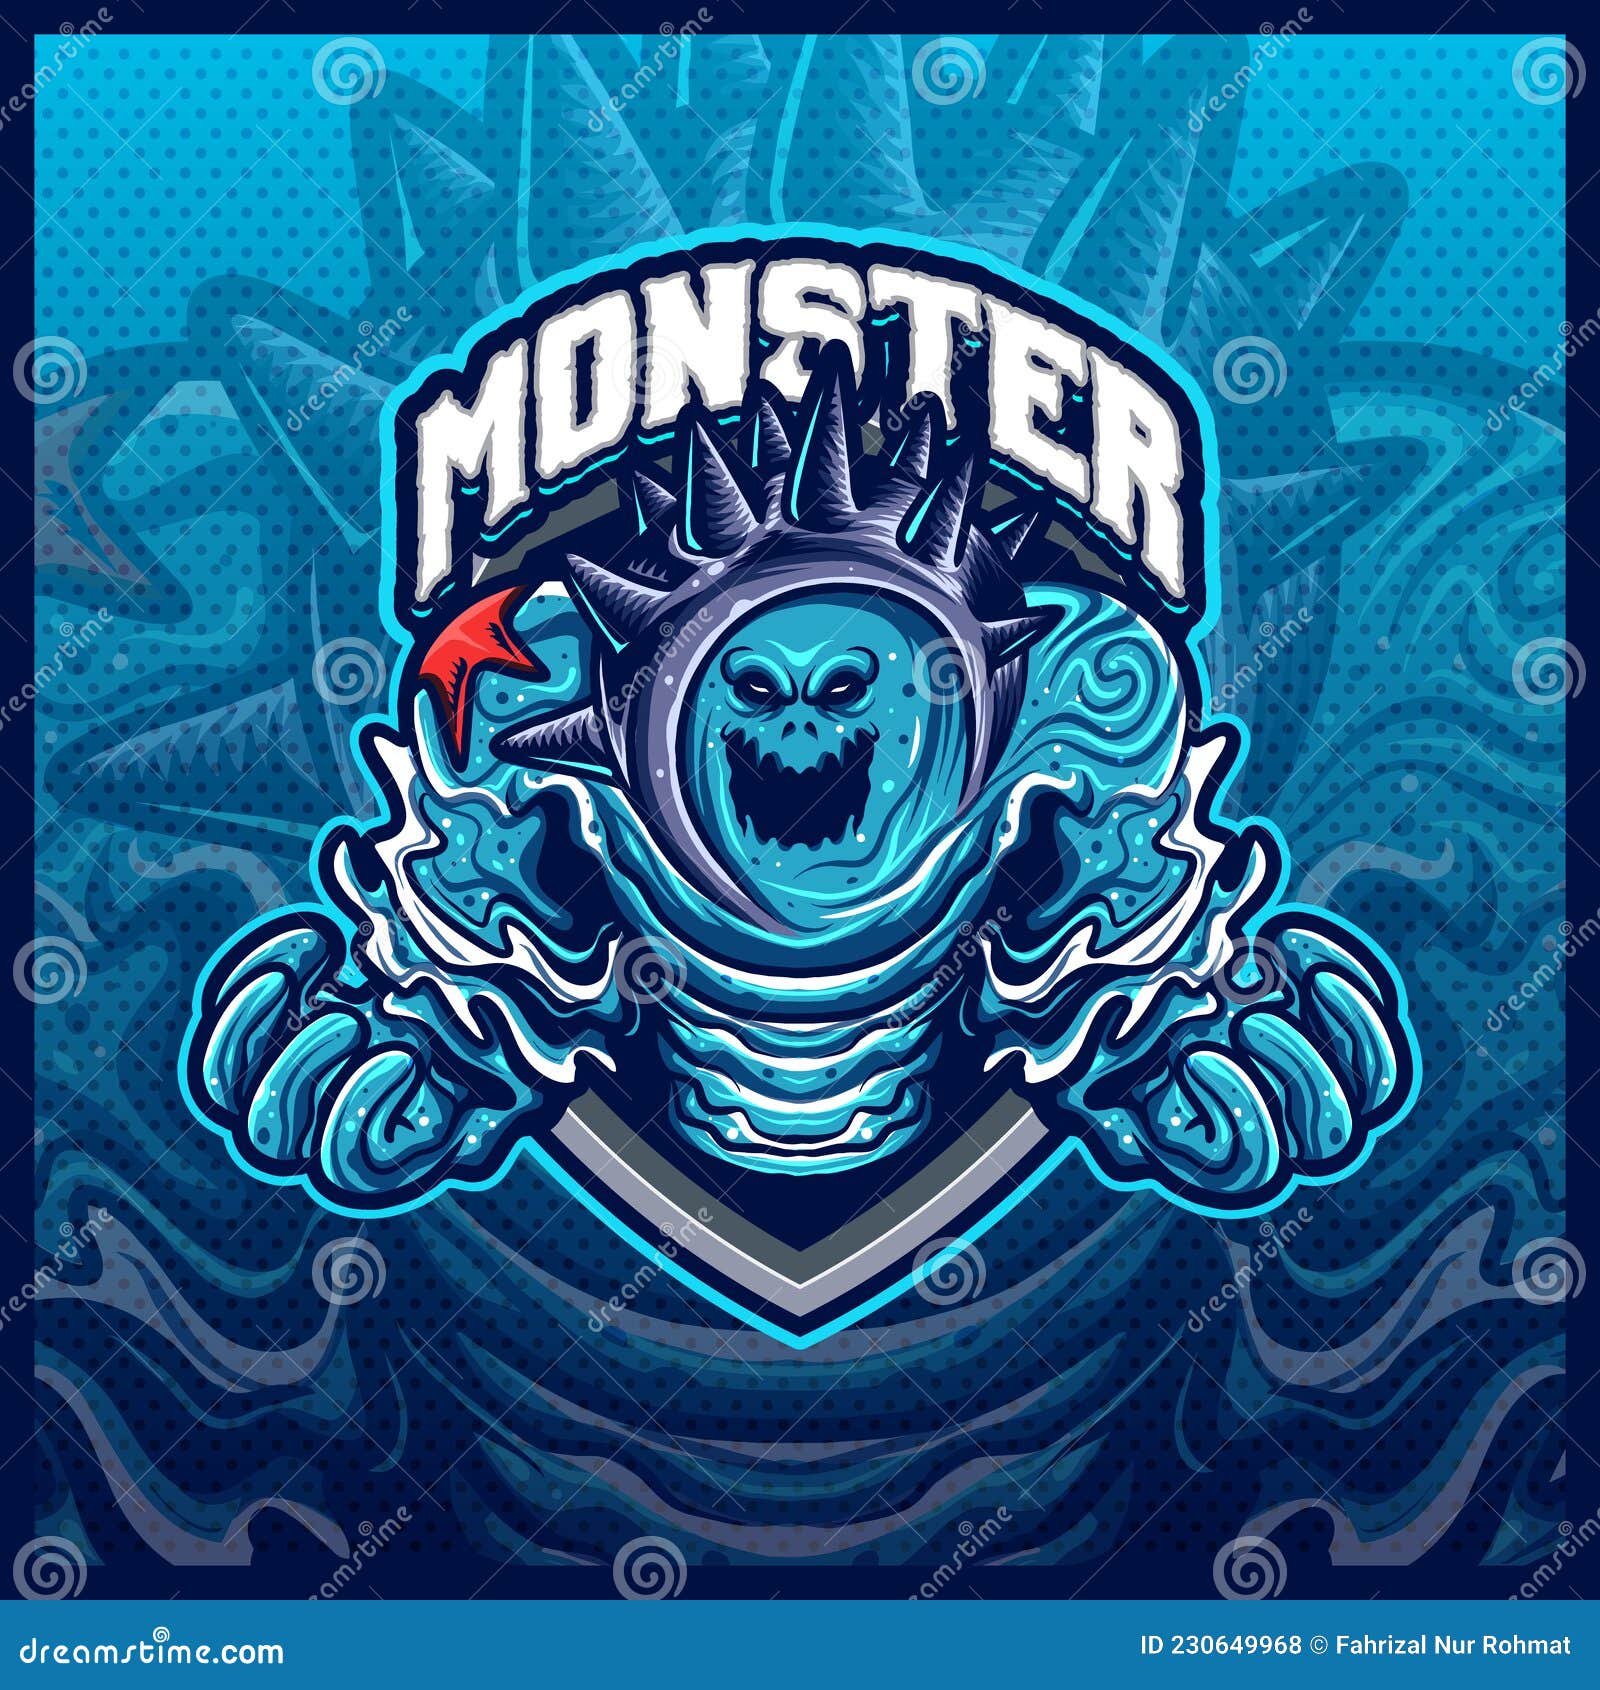 Monster Gaming (concept) :: Behance